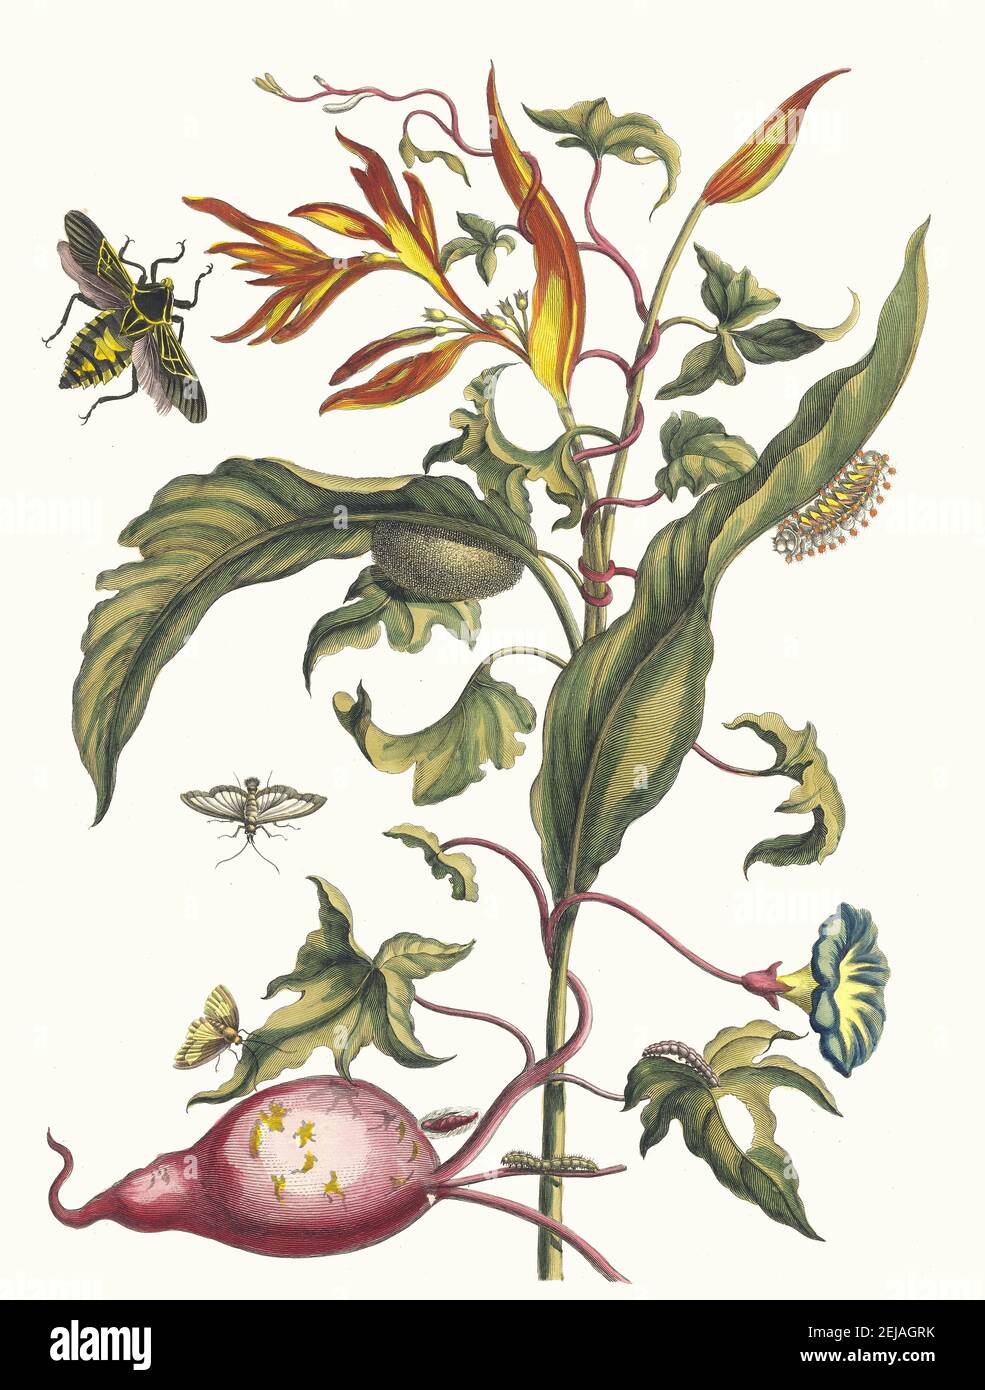 Ipomoea batatas and Heliconia psittacorum. From the Book Metamorphosis insectorum Surinamensium. Museum: PRIVATE COLLECTION. Author: MARIA SIBYLLA MERIAN. Stock Photo